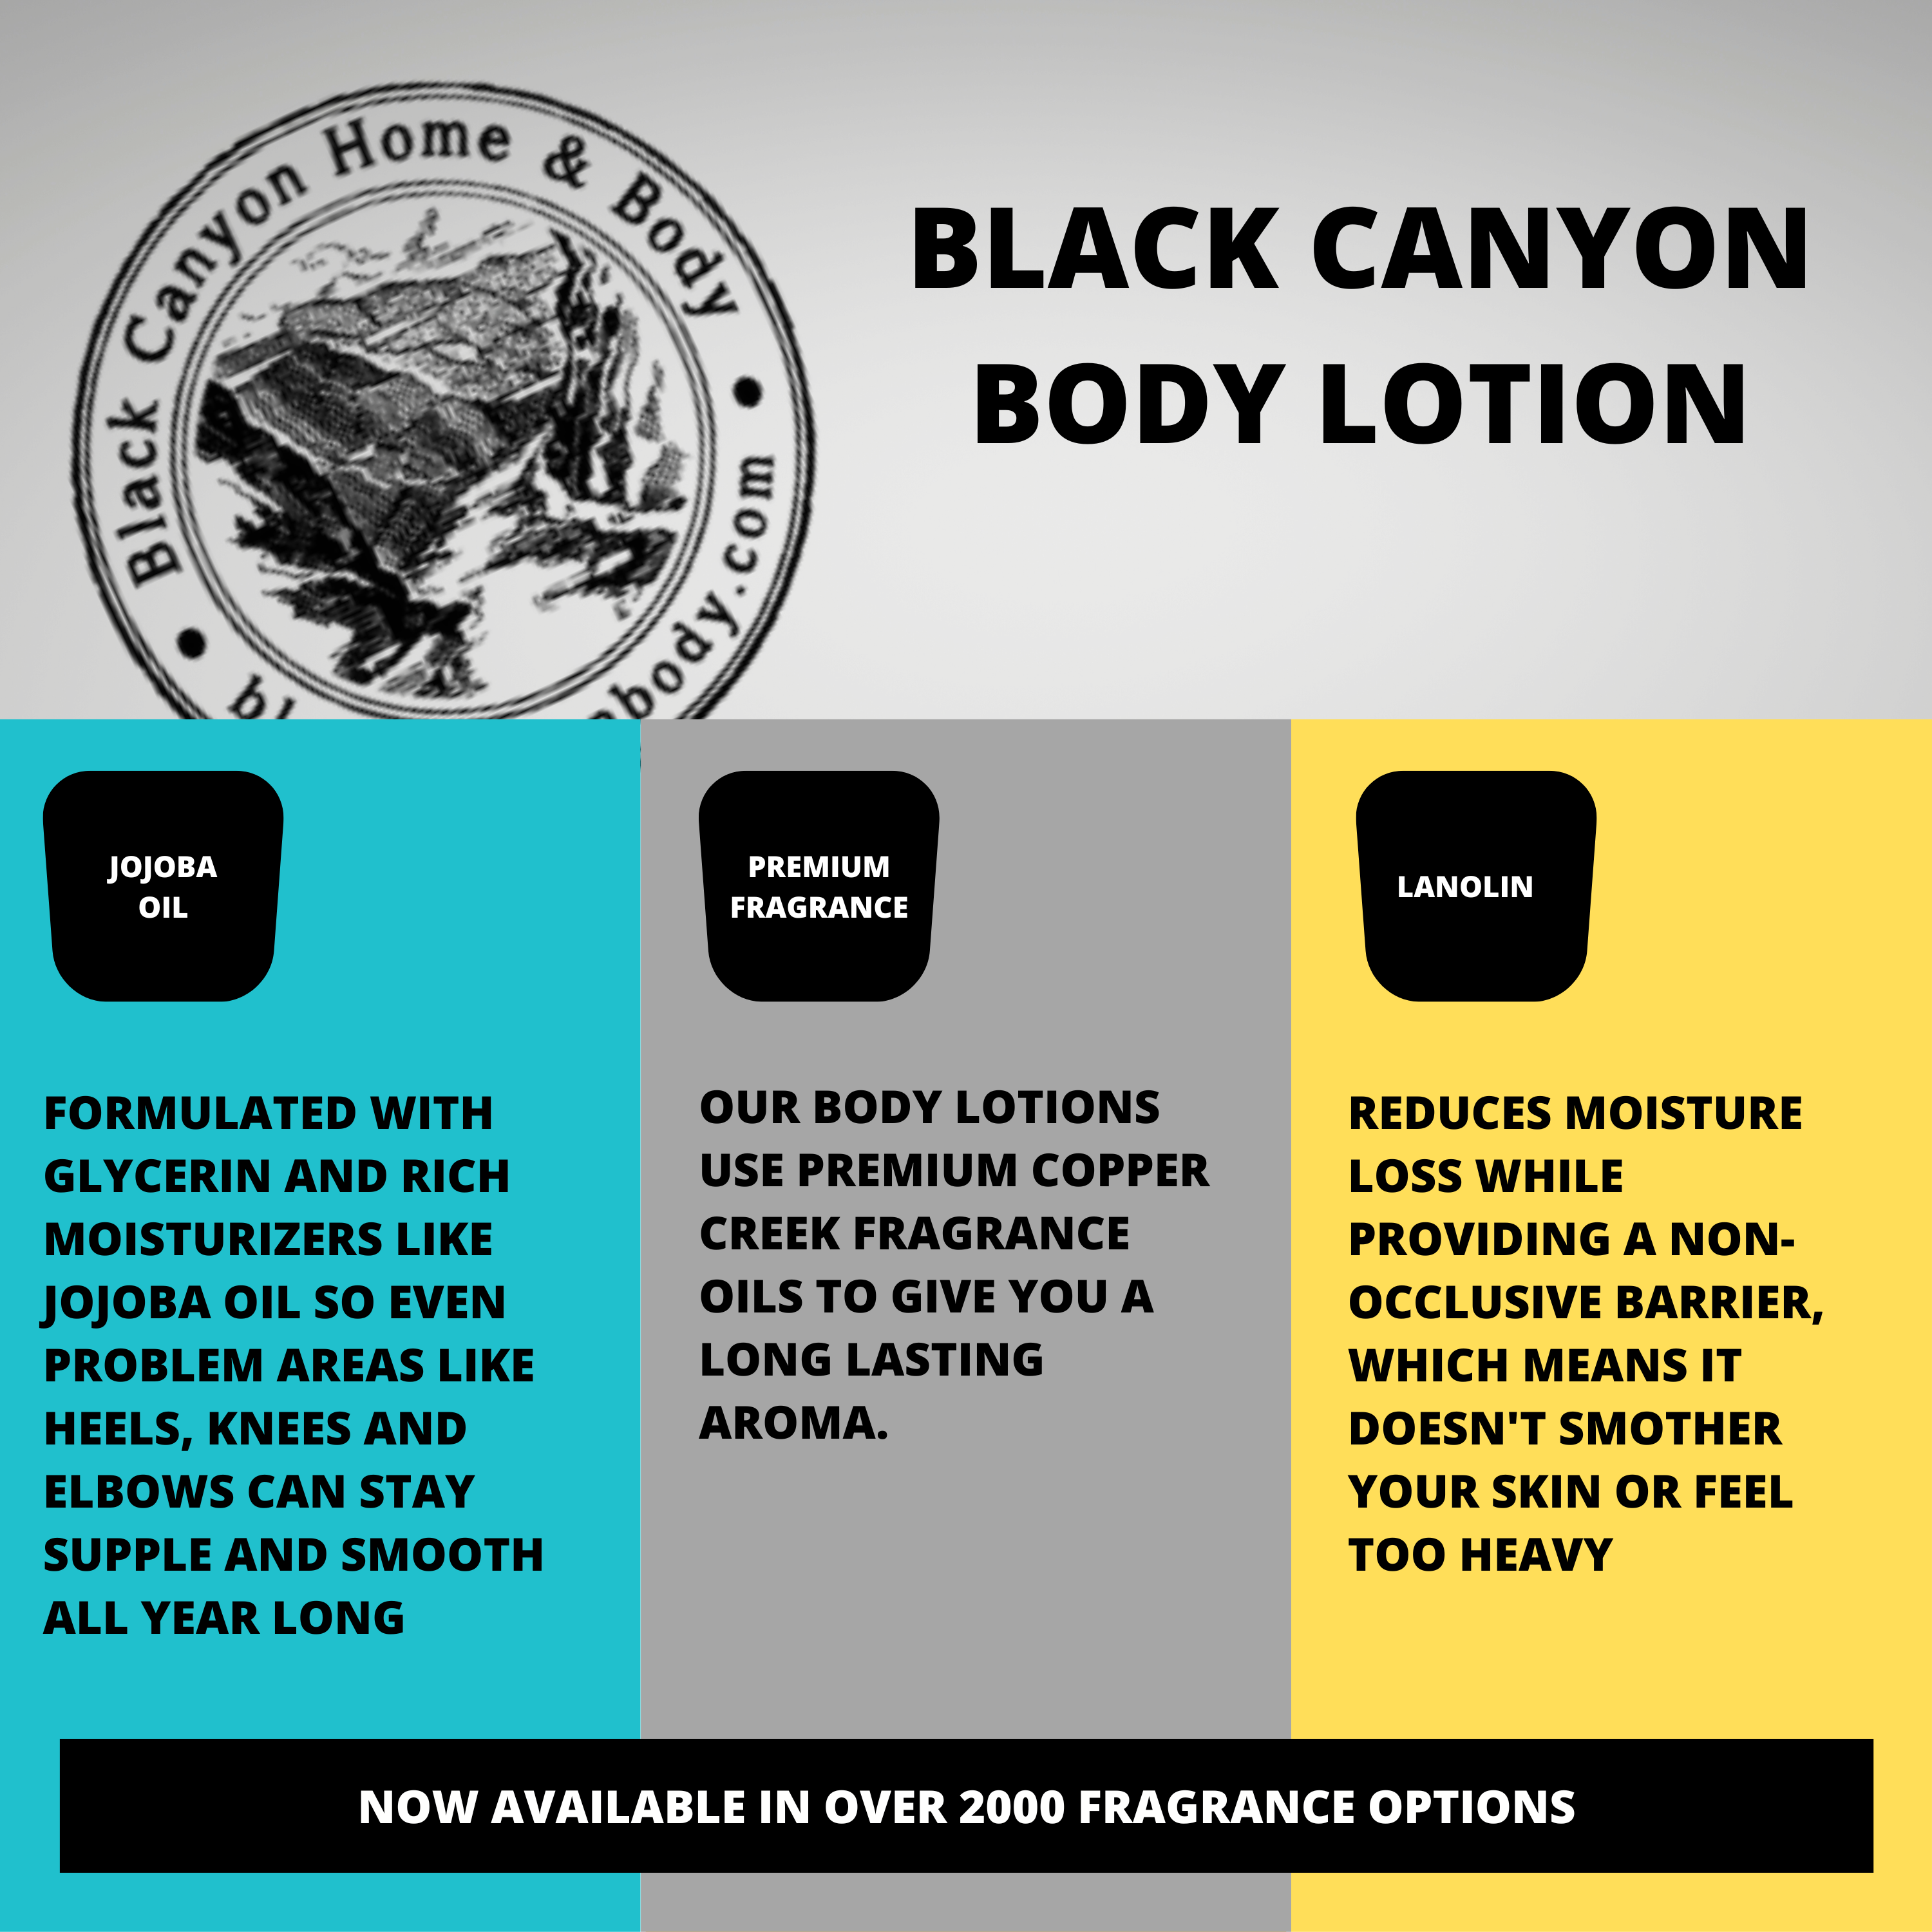 Black Canyon Bergamot & White Tea Scented Luxury Body Lotion with Lanolin and Jojoba Oil